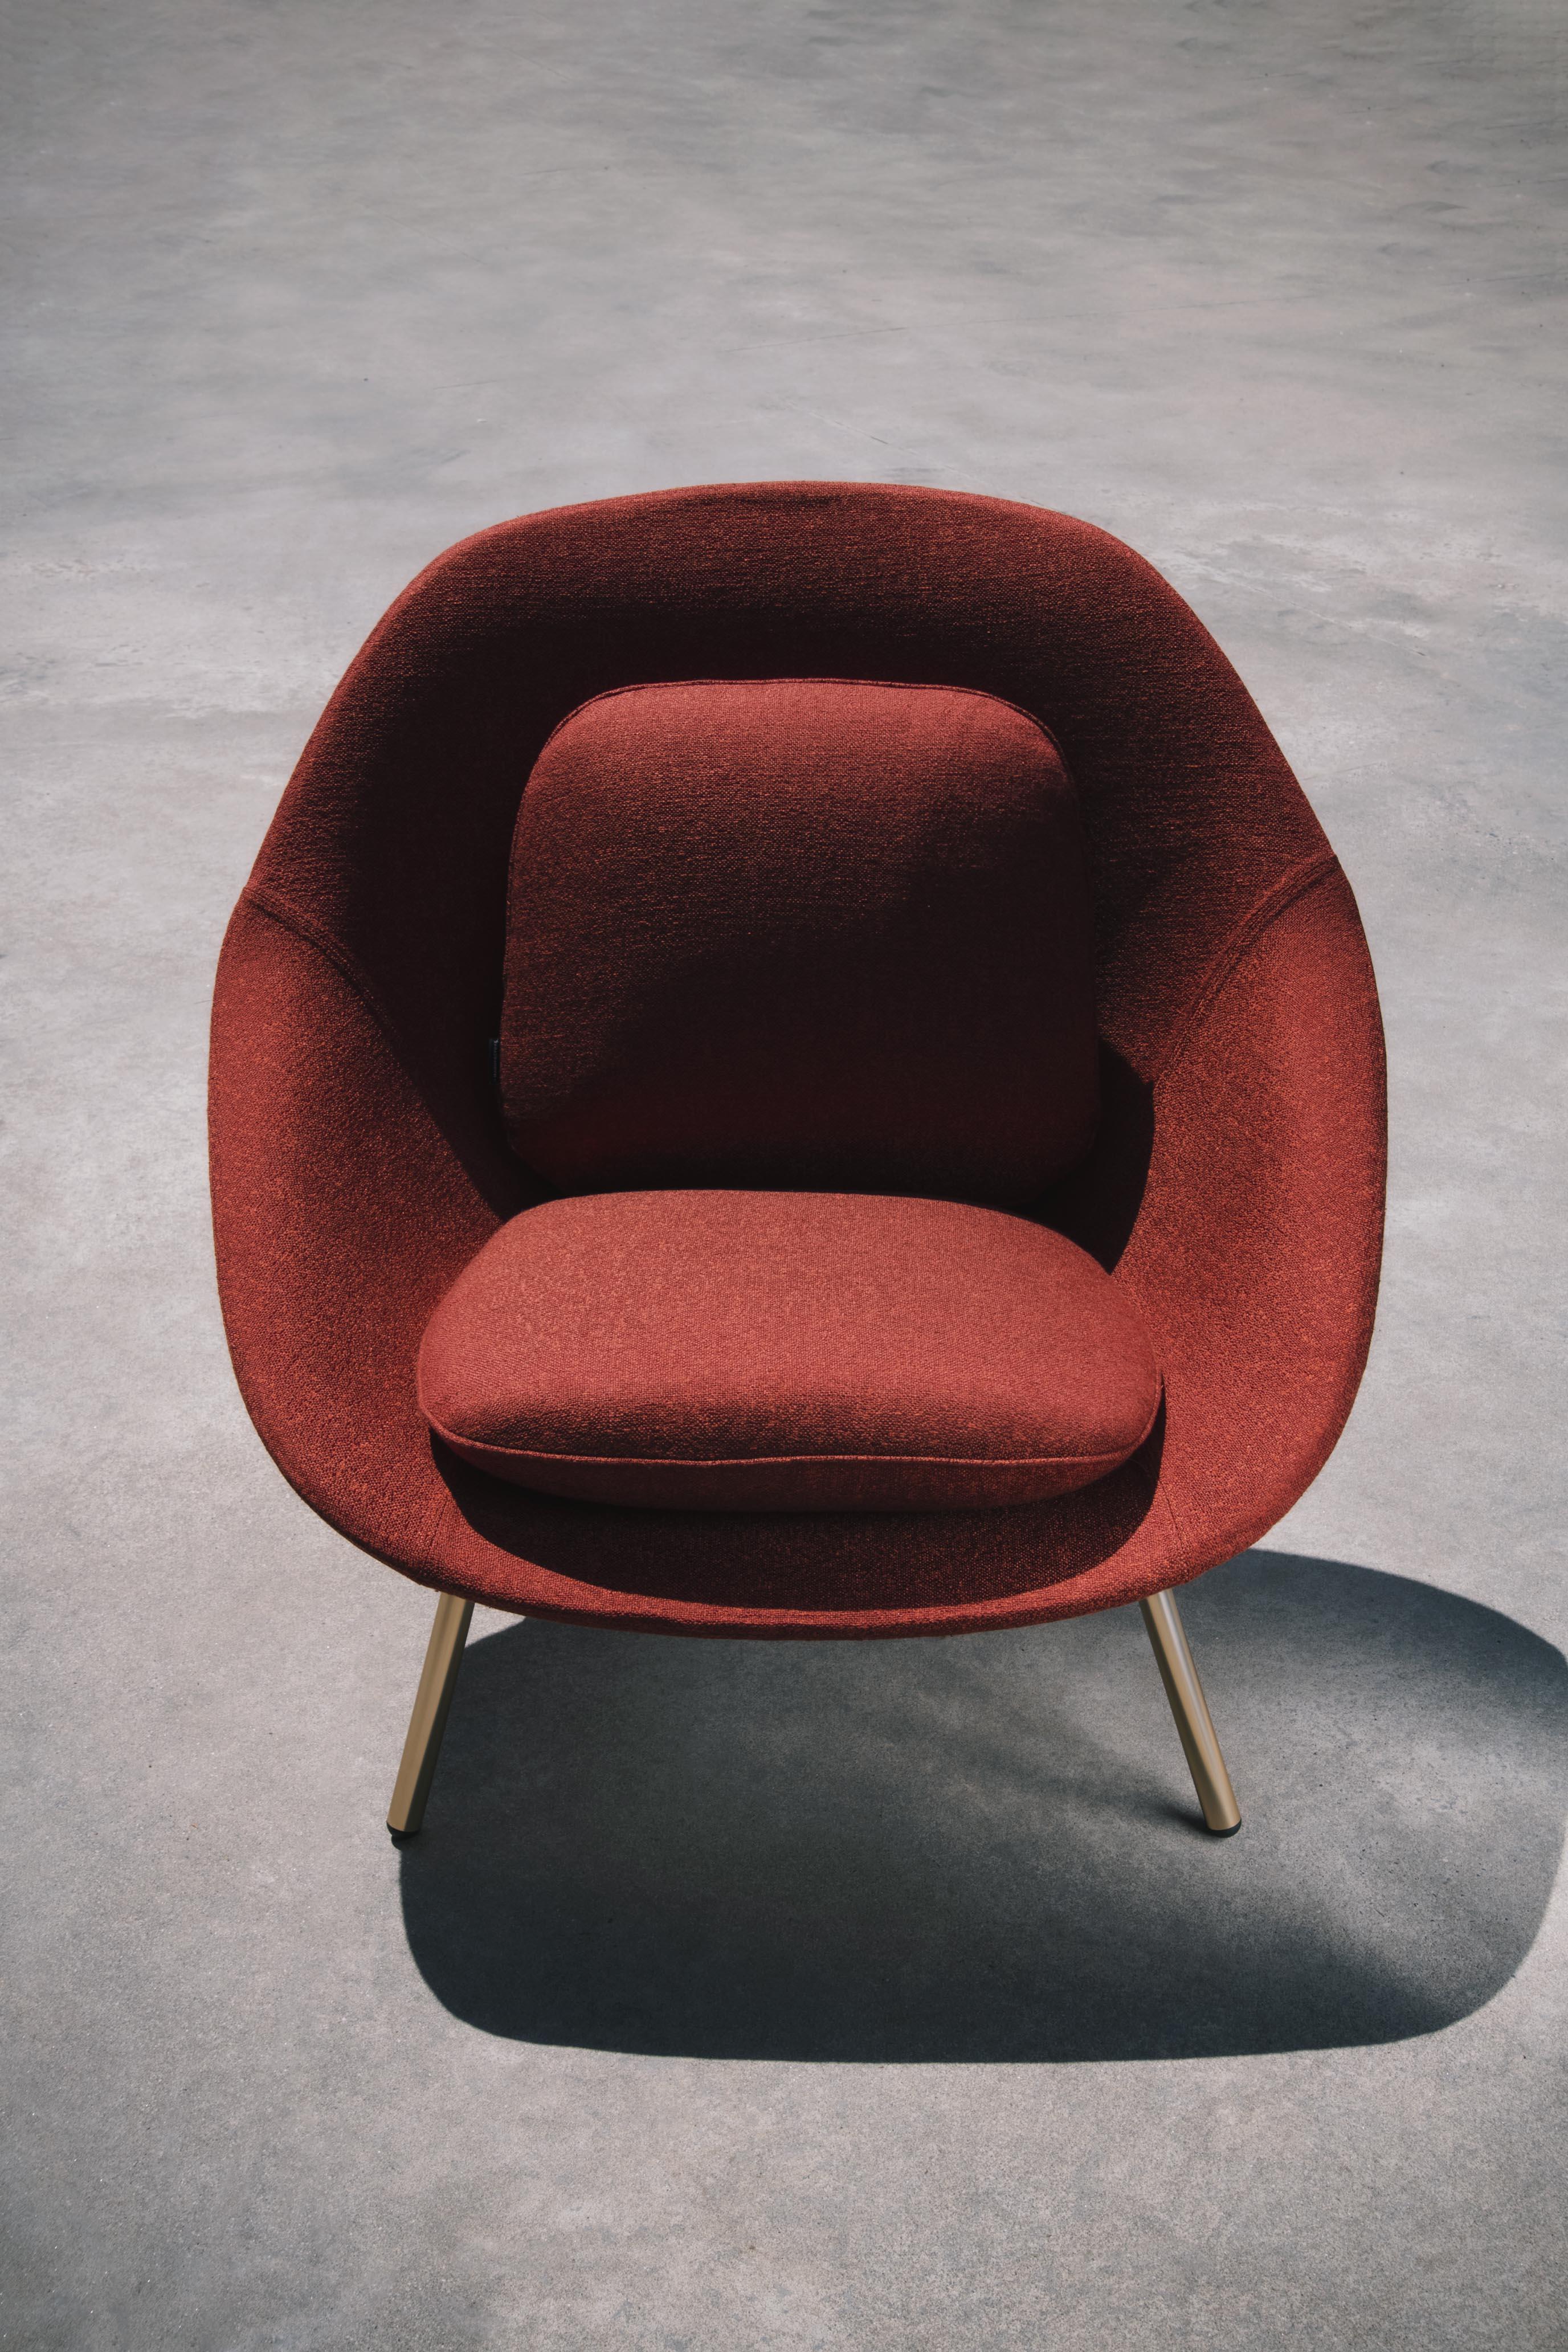 Organic Modern Amphora Lounge Chair by Noé Duchaufour Lawrance For Sale